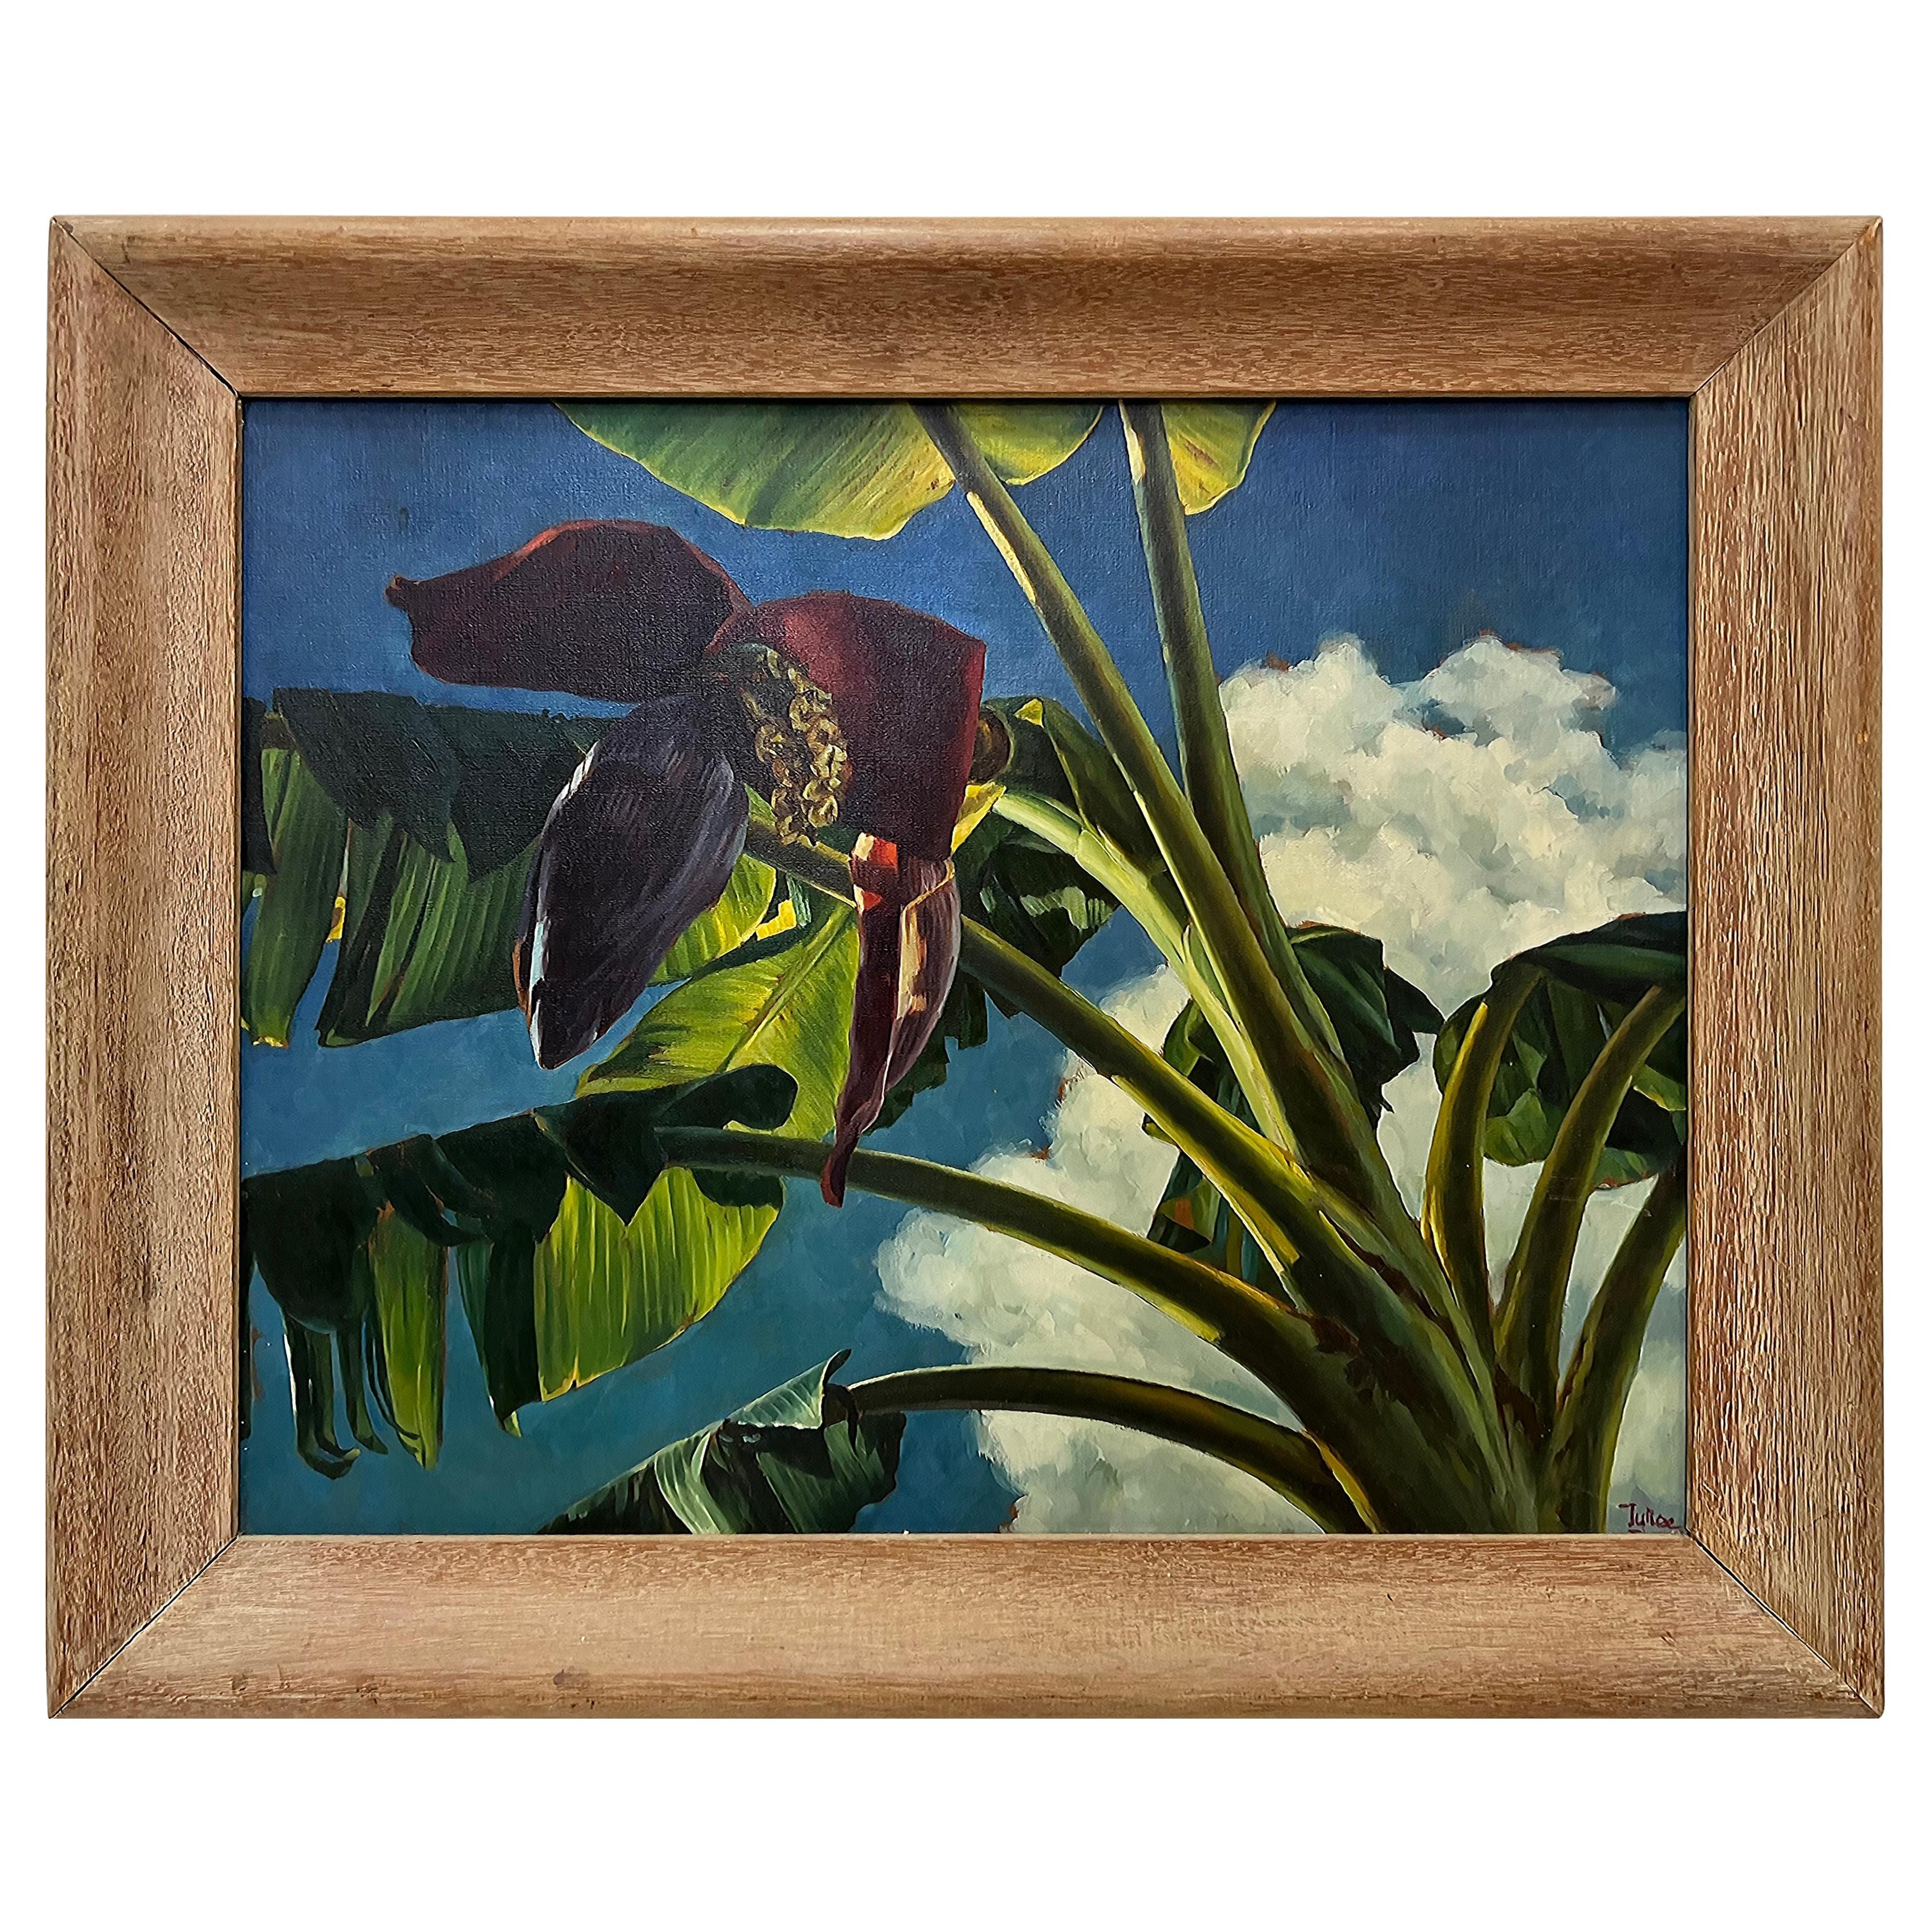 1940s Signed Realist WPA Banana Flower Oil Painting